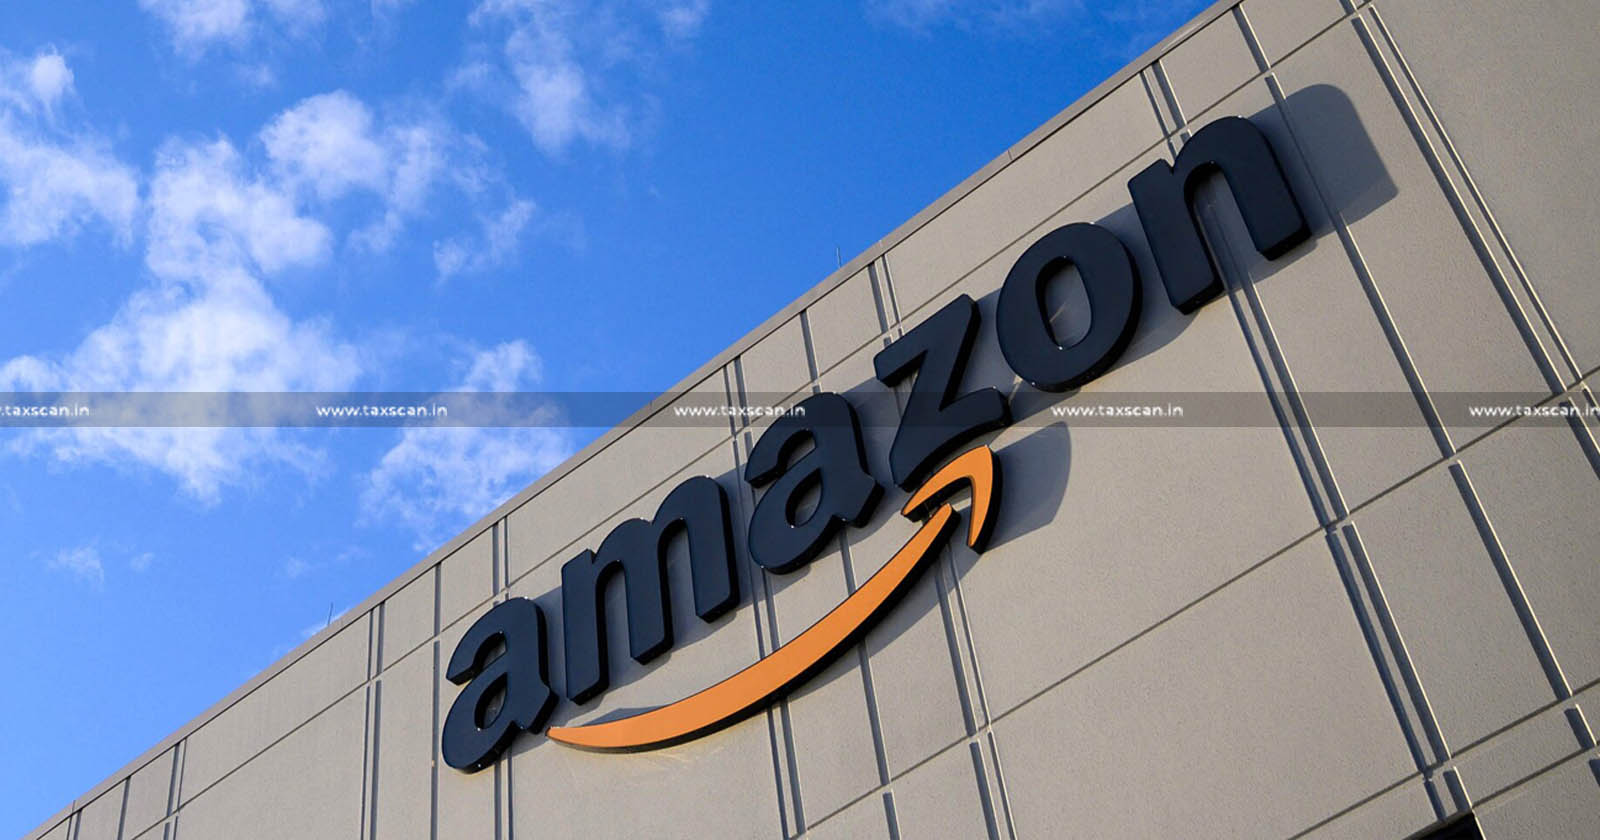 CMA Vacancy in Amazon - CA Vacancy in Amazon - Vacancy in Amazon - CMA Hiring in Amazon - CA Hiring in Amazon - taxscan